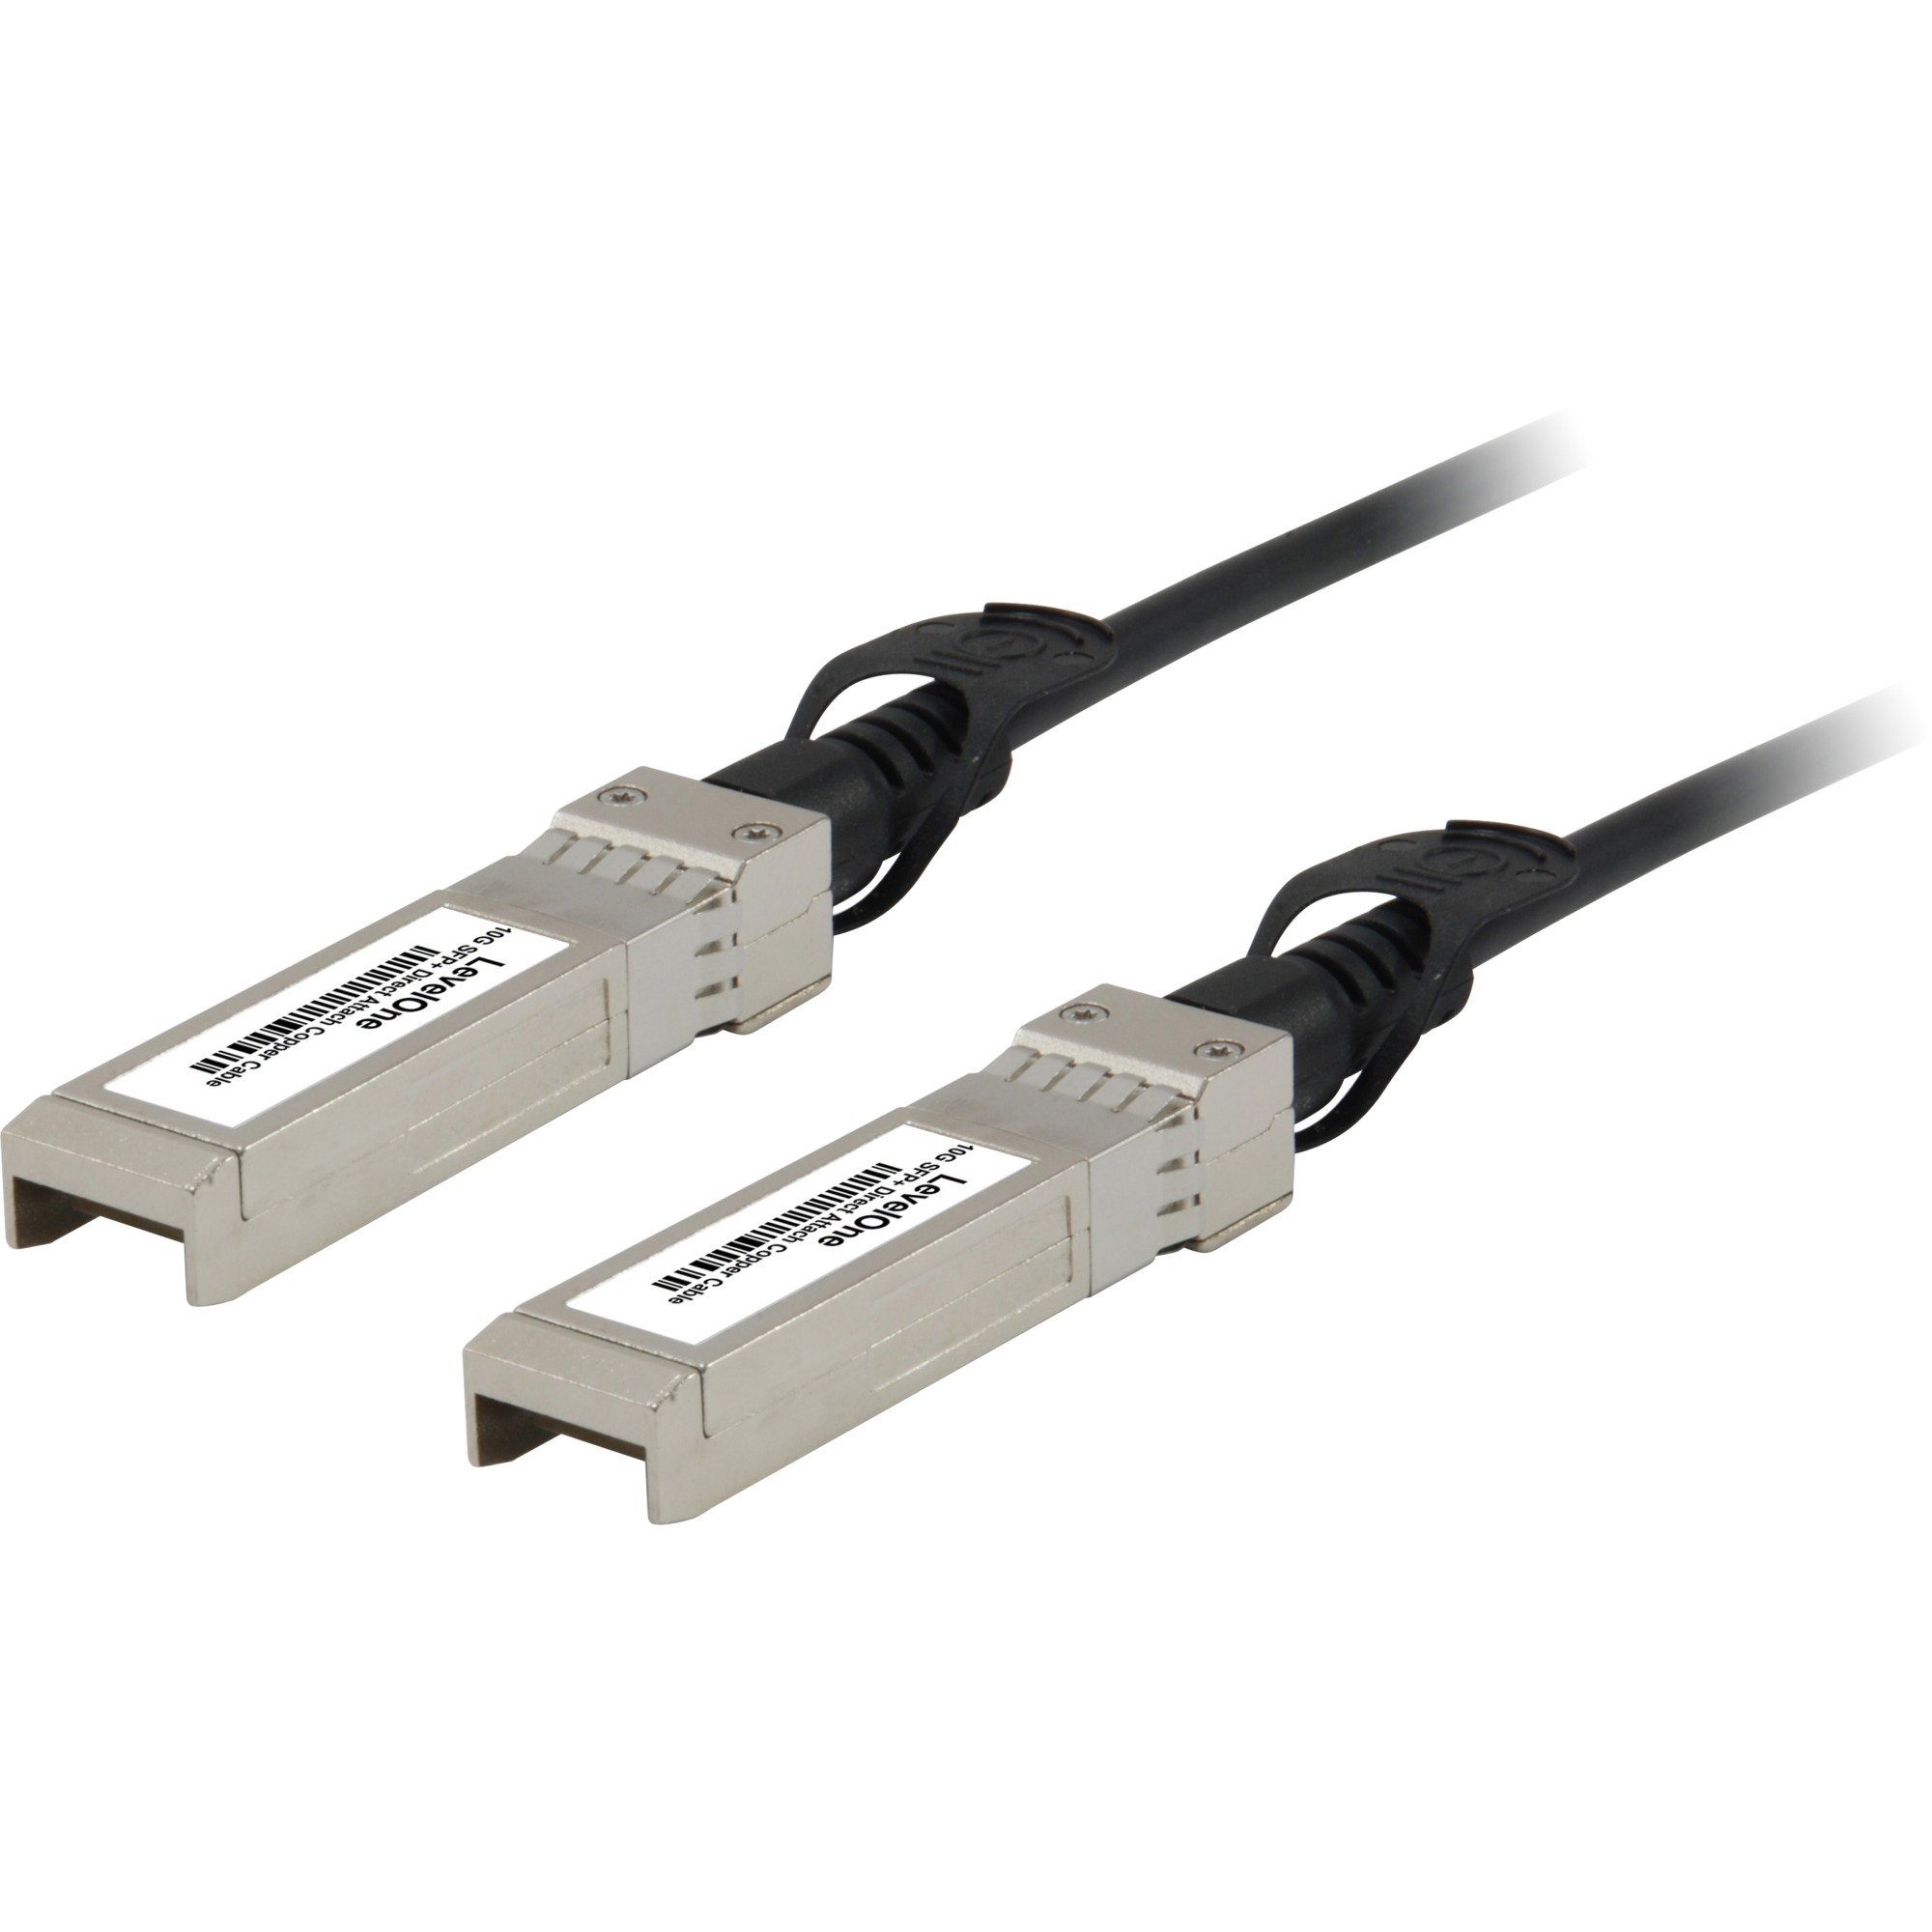 DAC-0101 kabel optyczny 1 m SFP+ Black,Stainless steel, Adapter sieciowy